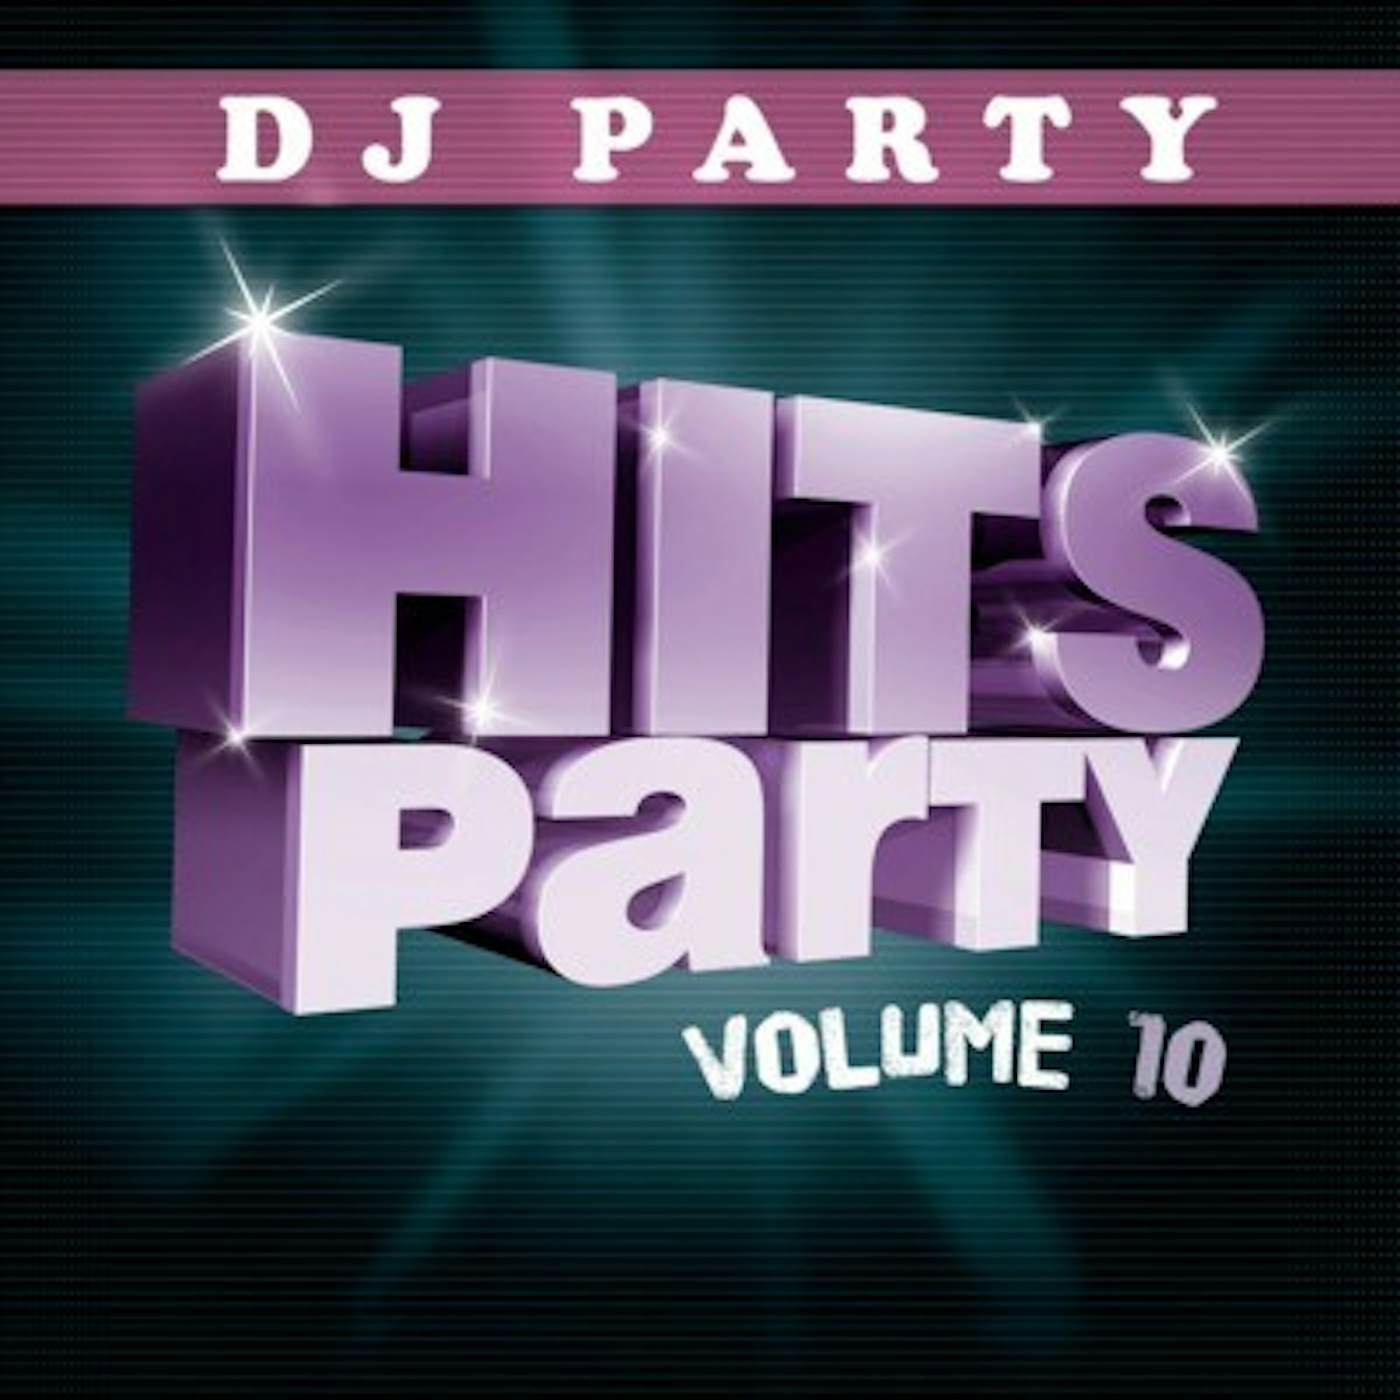 DJ Party HITS PARTY VOL. 10 CD